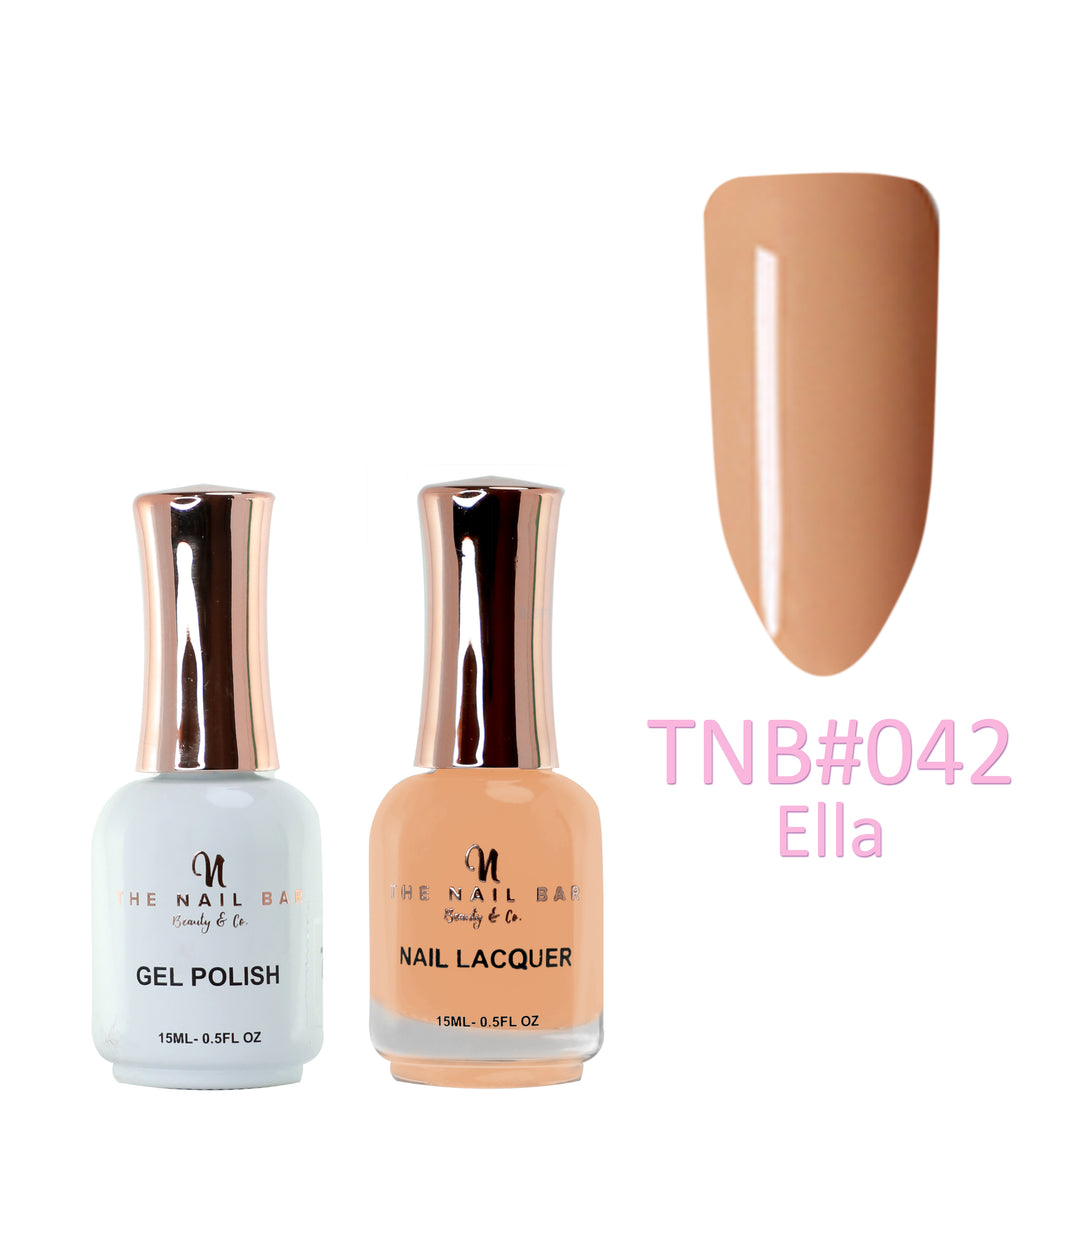 Dual Polish/Gel colour matching (15ml) - Ella - The Nail Bar Beauty & Co.